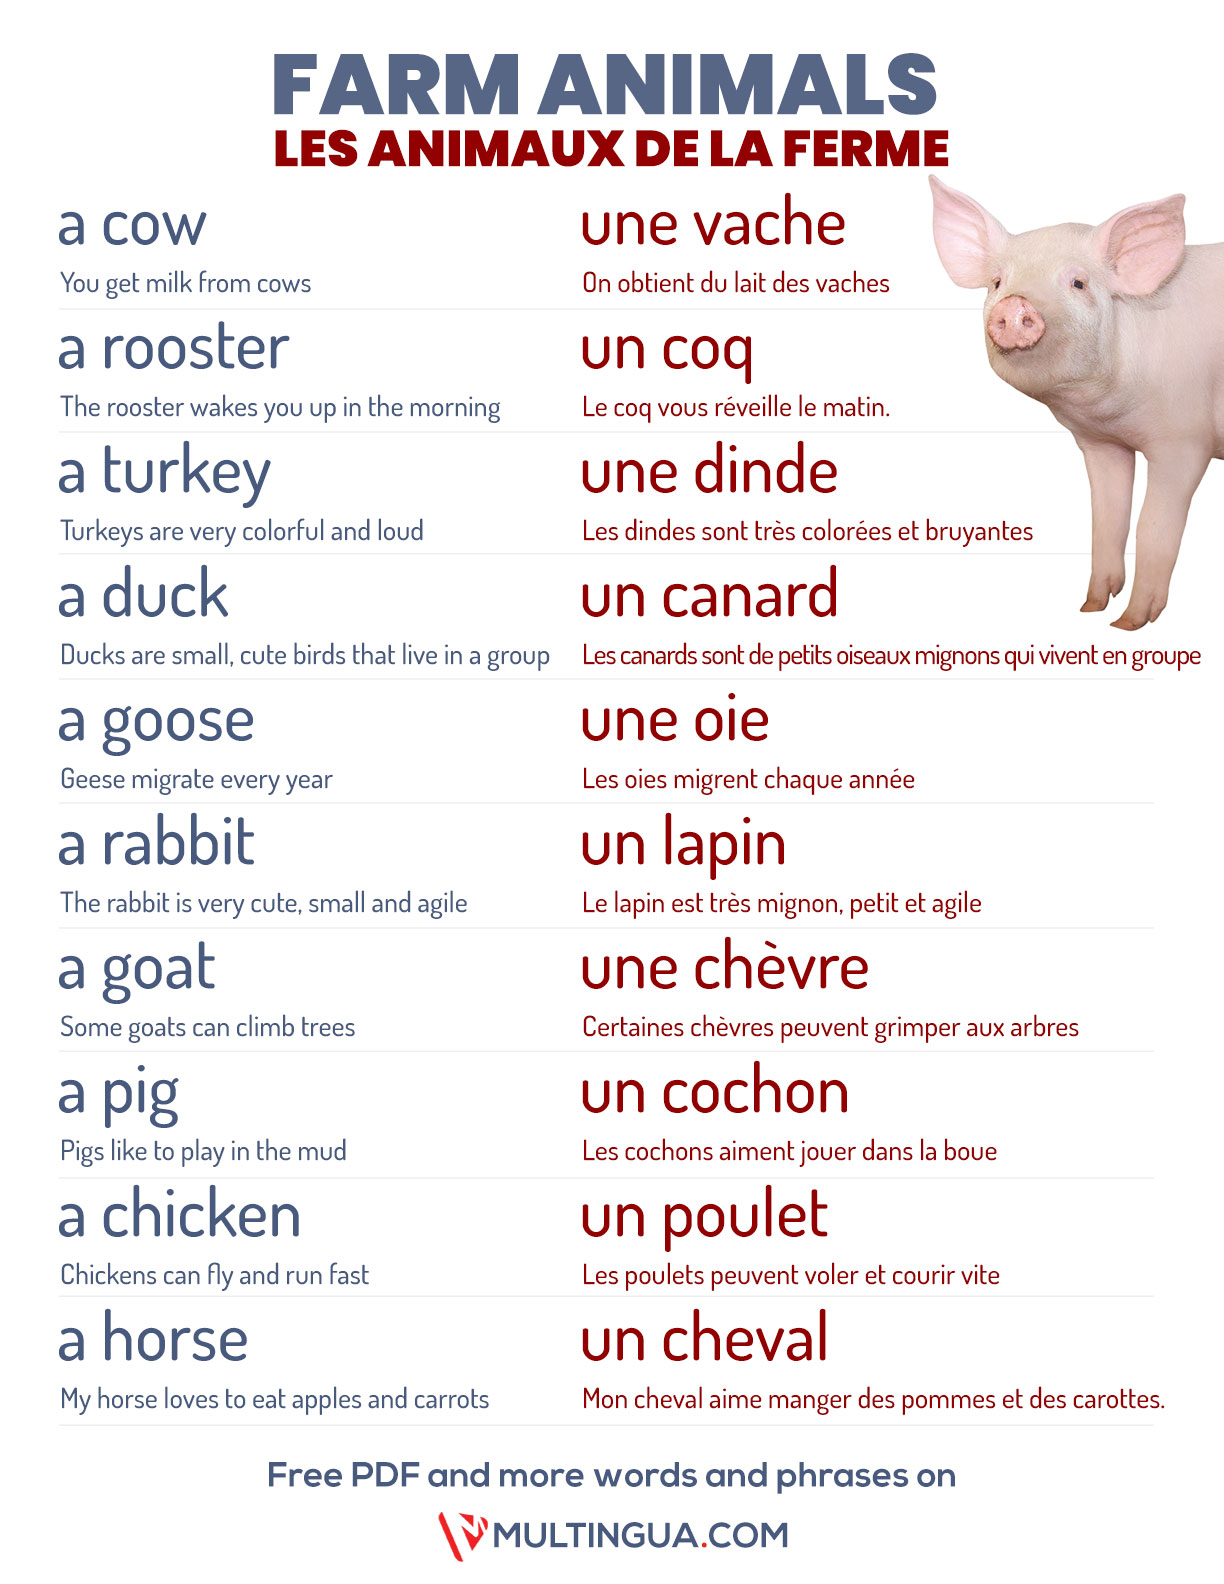 farm animals in French